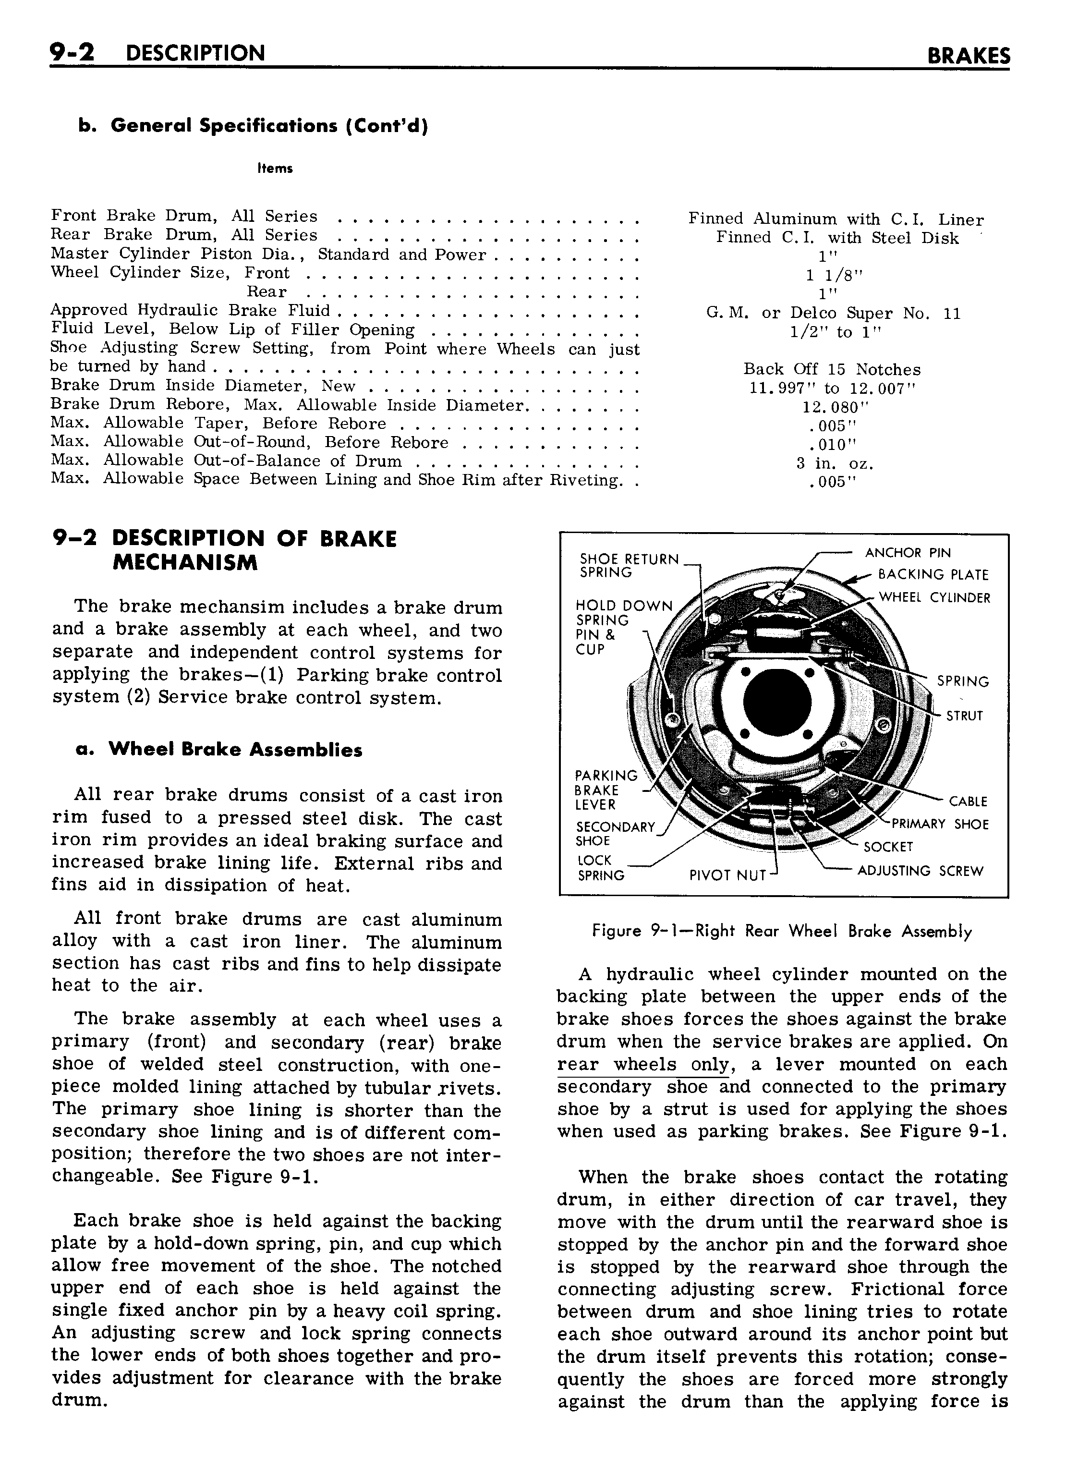 n_09 1961 Buick Shop Manual - Brakes-002-002.jpg